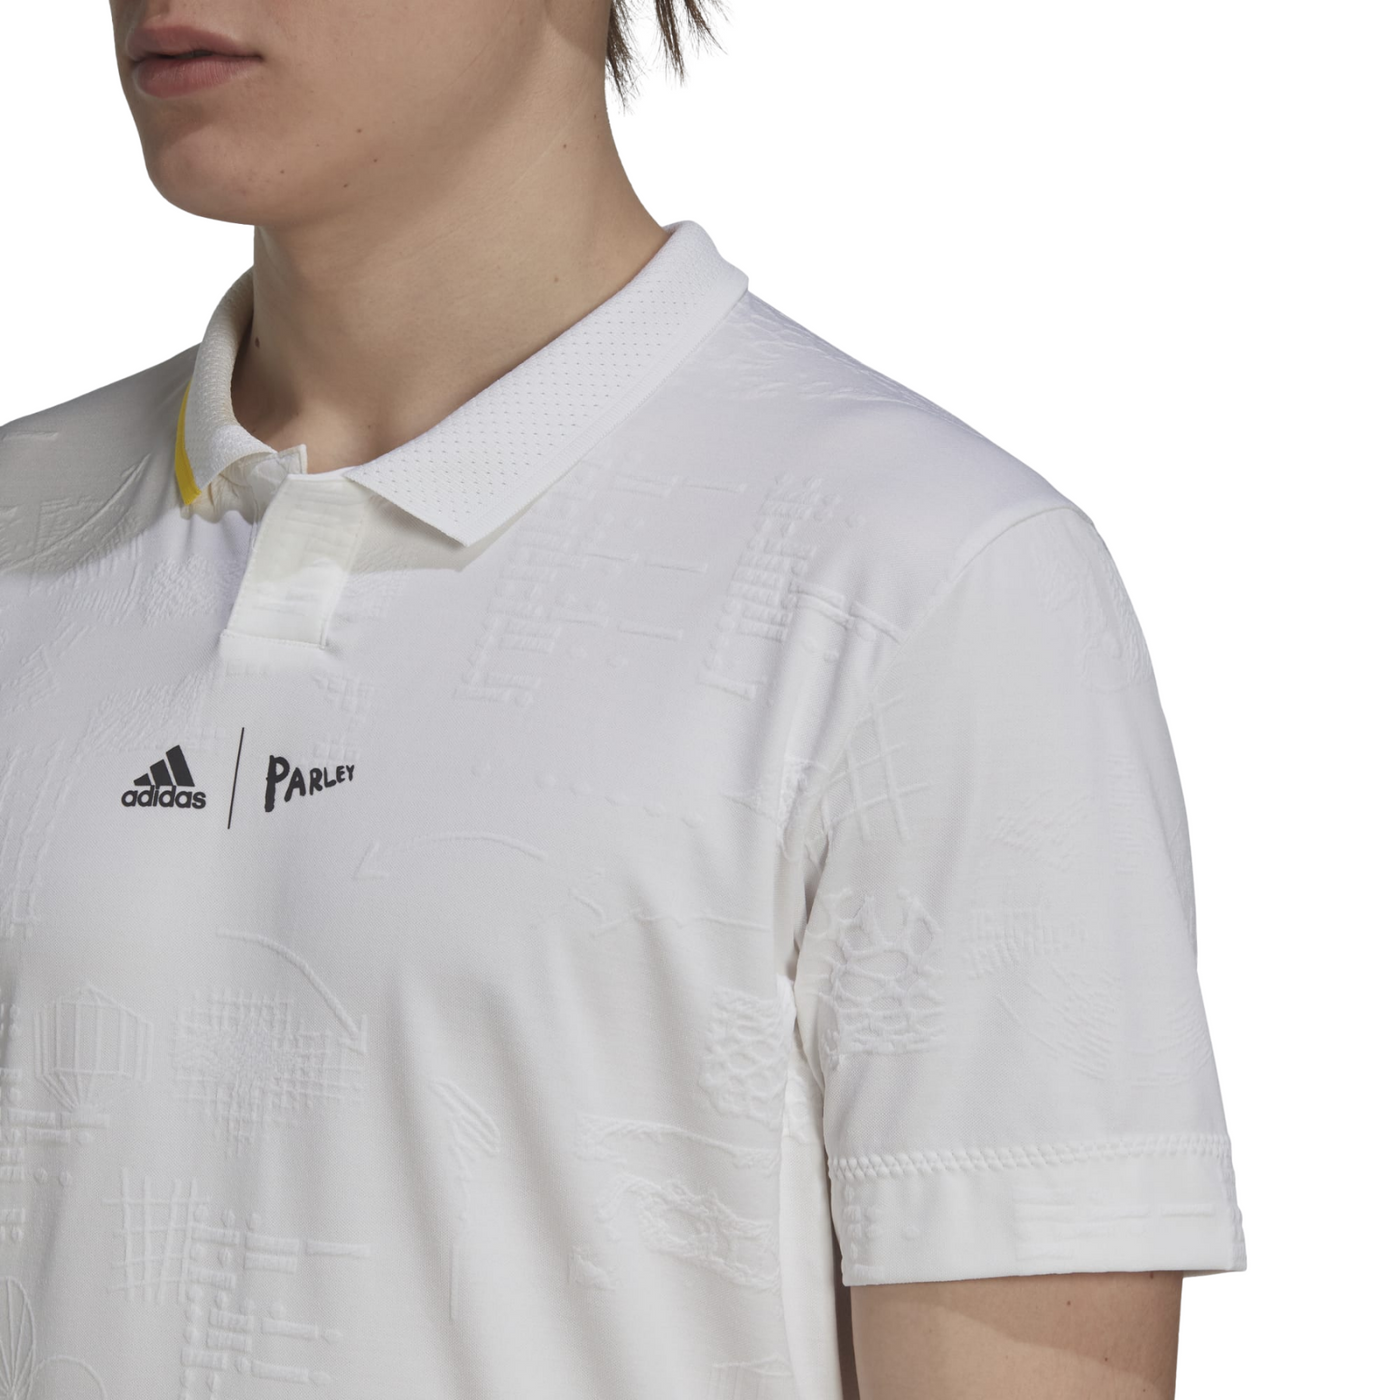 Adidas London Free Lift Polo Shirt - White